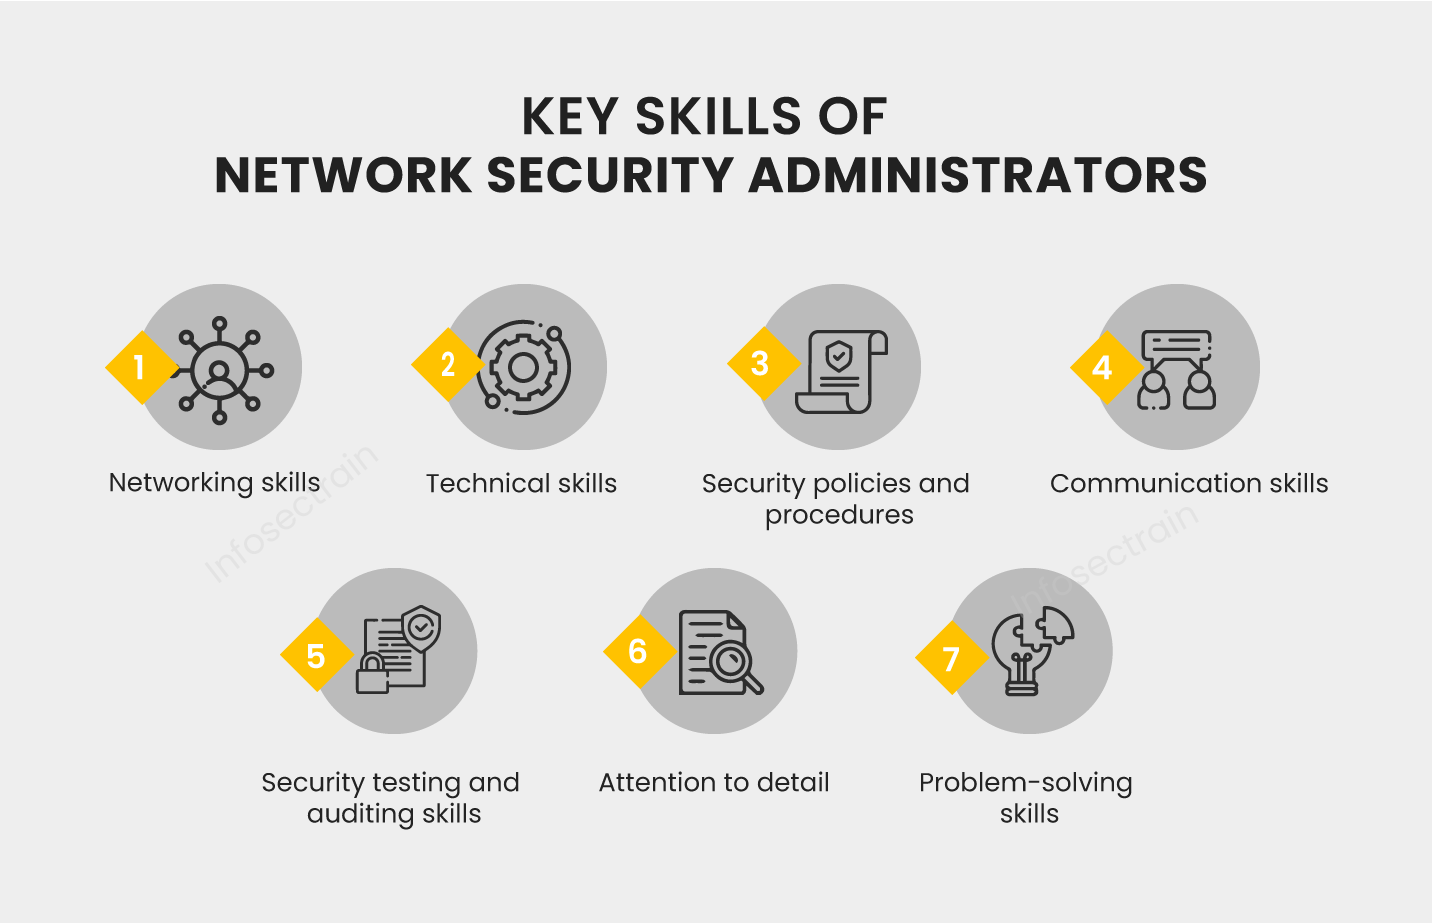 Key skills of Network Security Administrators